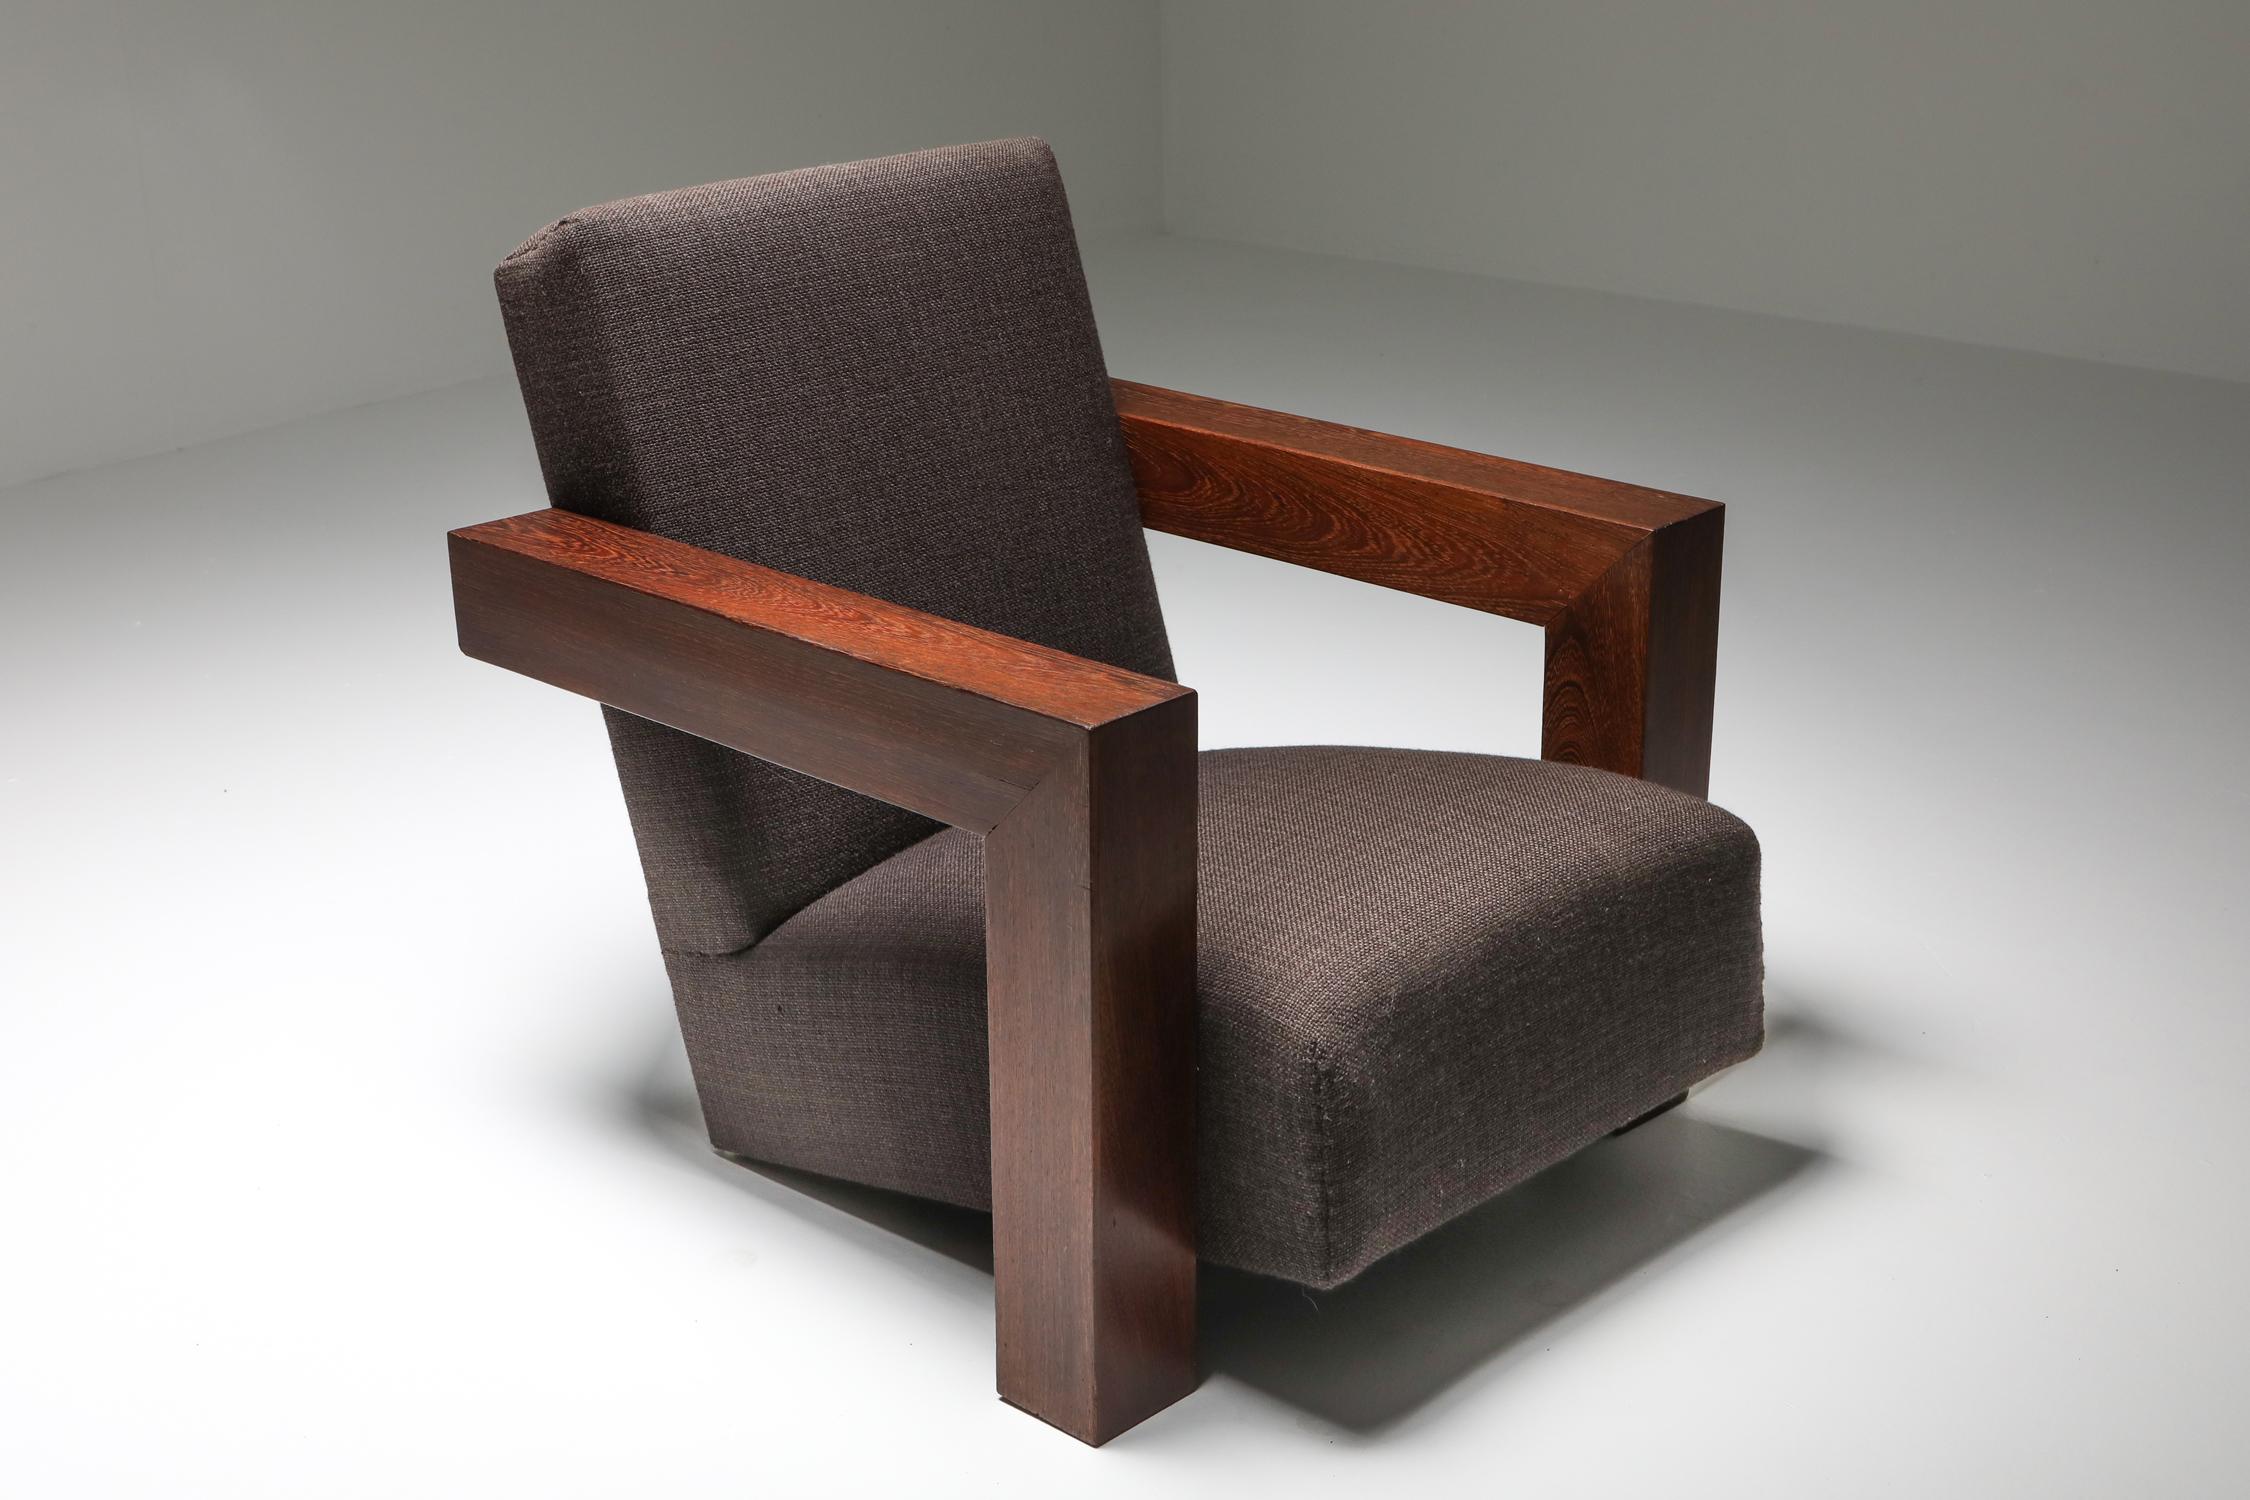 Rietveld's Utrecht Chair with a Wooden Frame, a Pair 1